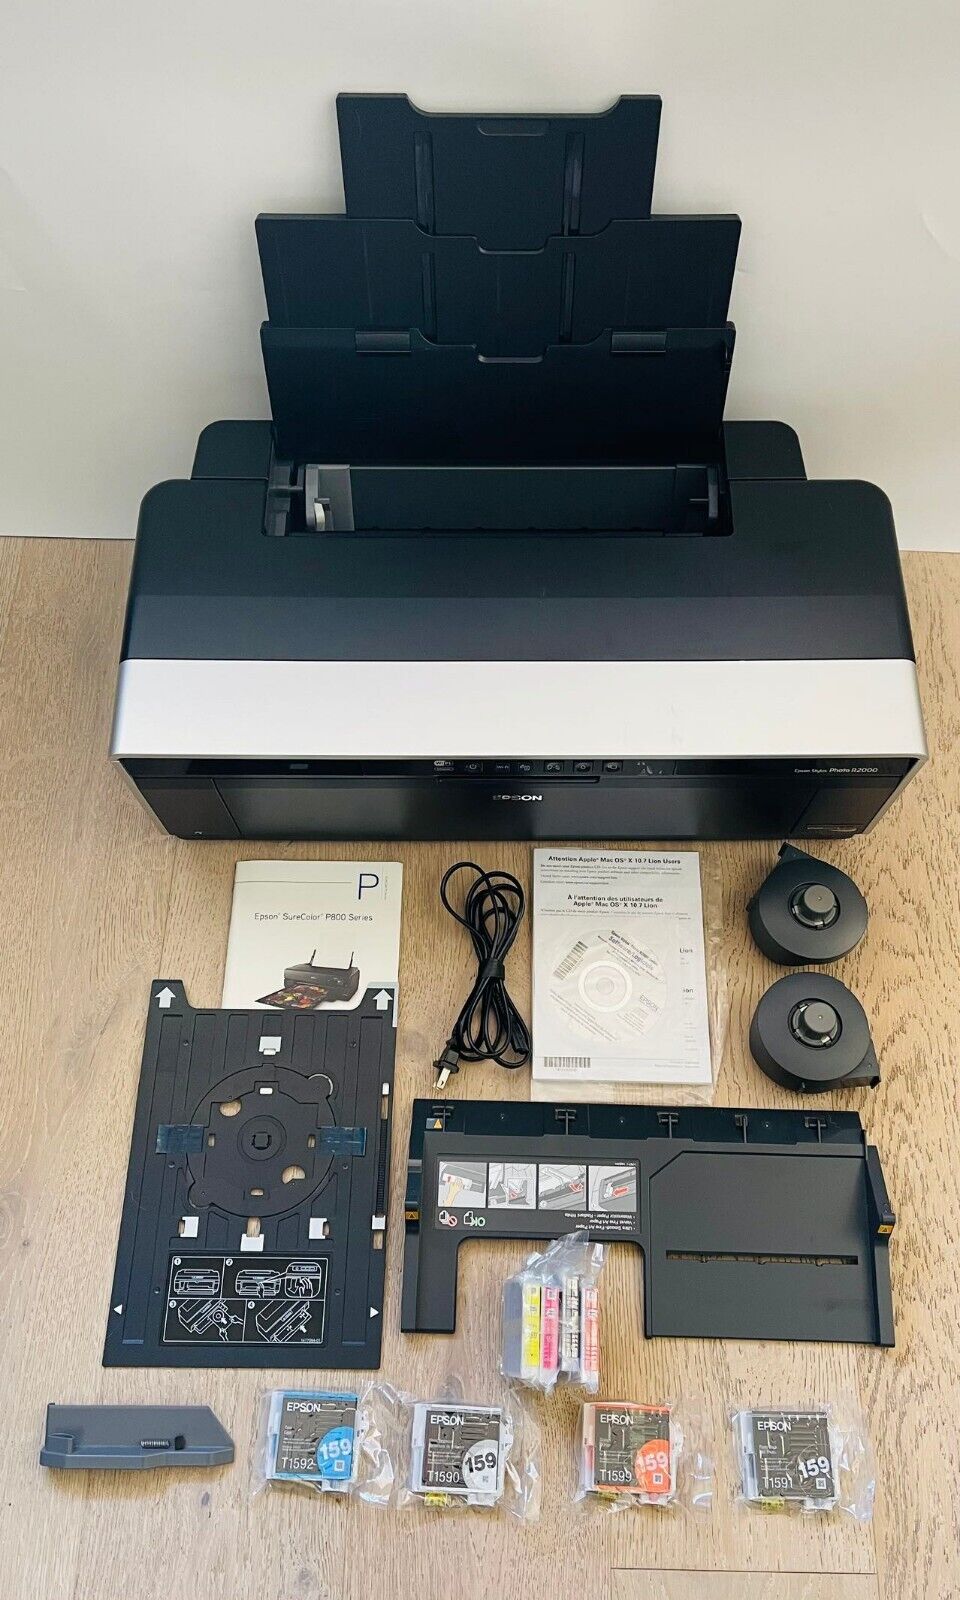 Epson Stylus Photo R2000 - Ink Jet Printer - Model B472A + Extra Accessories